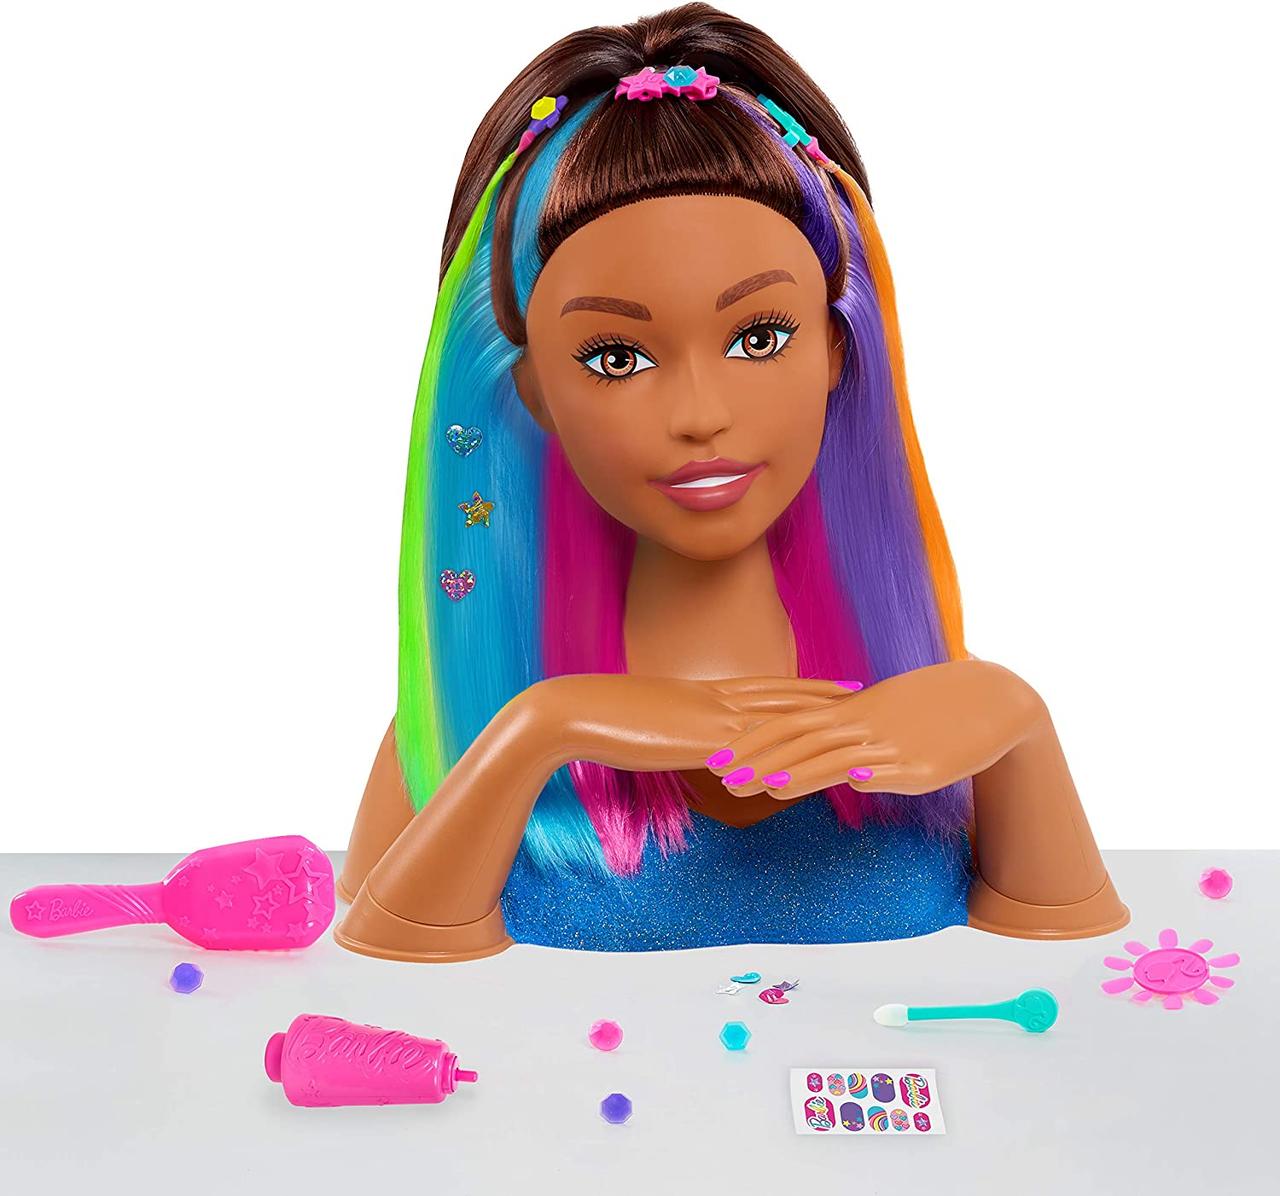 Barbie Барбі райдужна голова манекен для зачісок і манікюру Deluxe Rainbow Styling Heads